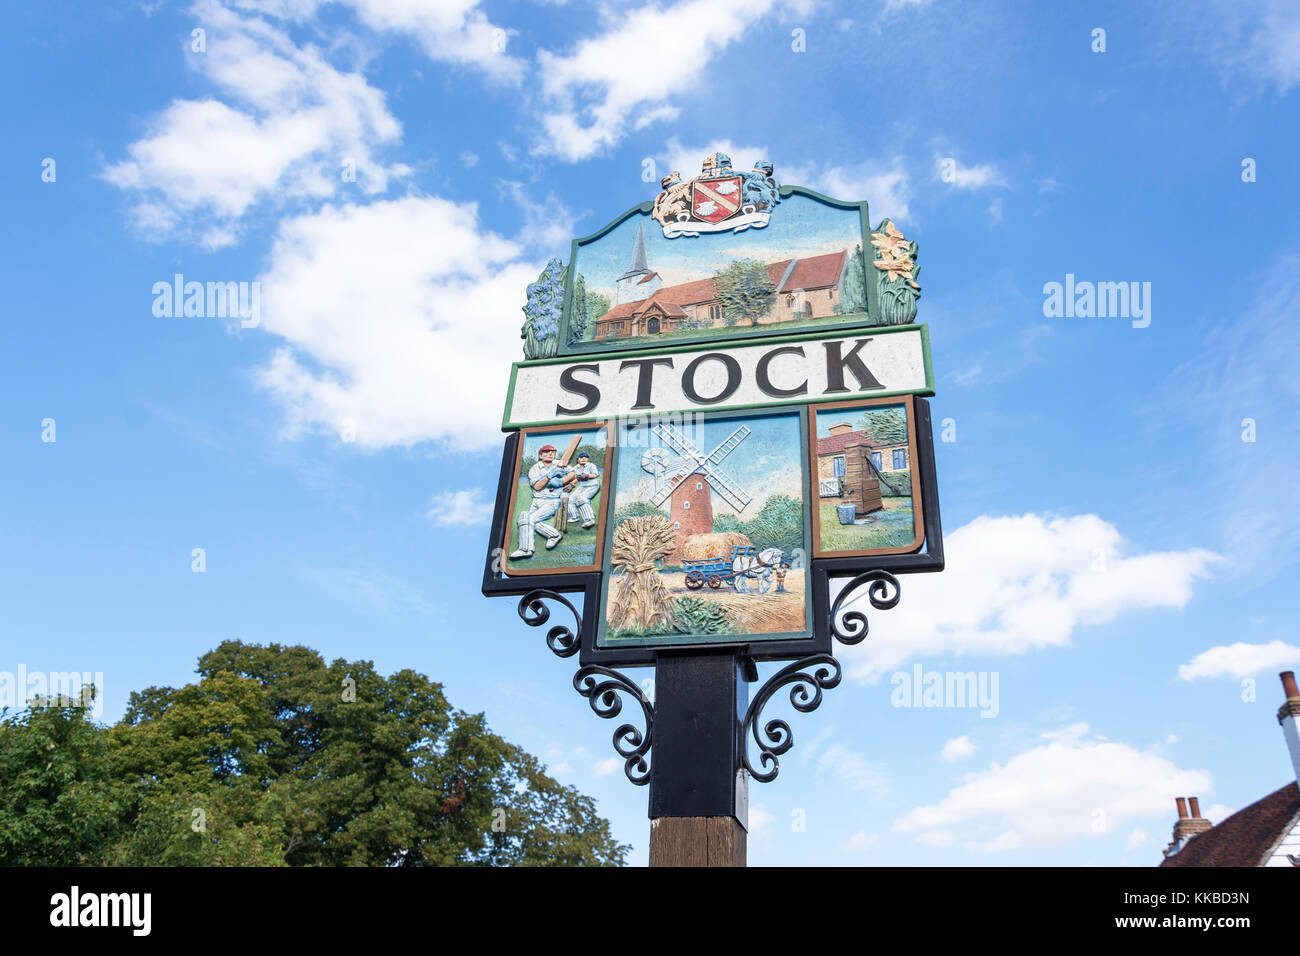 Stock Village sign, High Street, Stock, Essex, England, United Kingdom Stock Photo